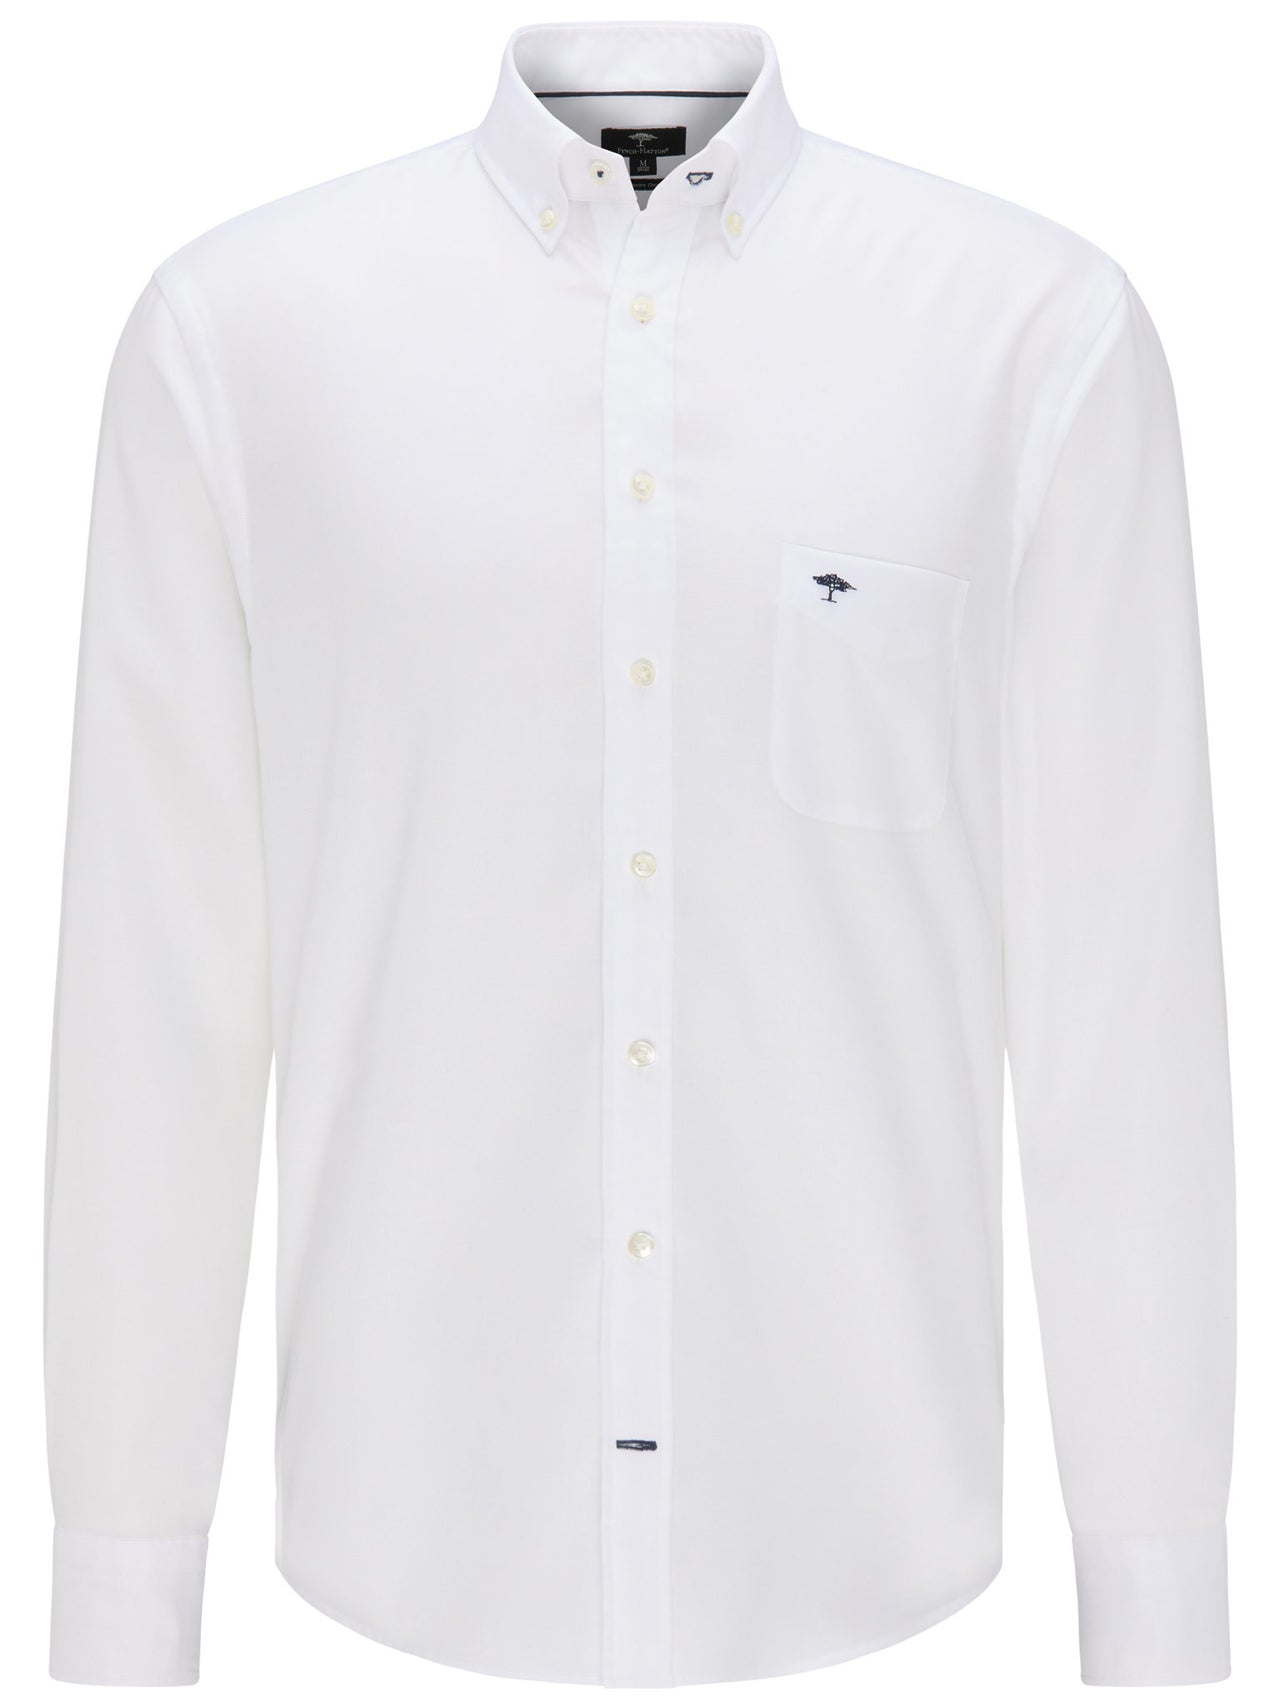 Fynch Hatton All Season Oxford Shirt in White